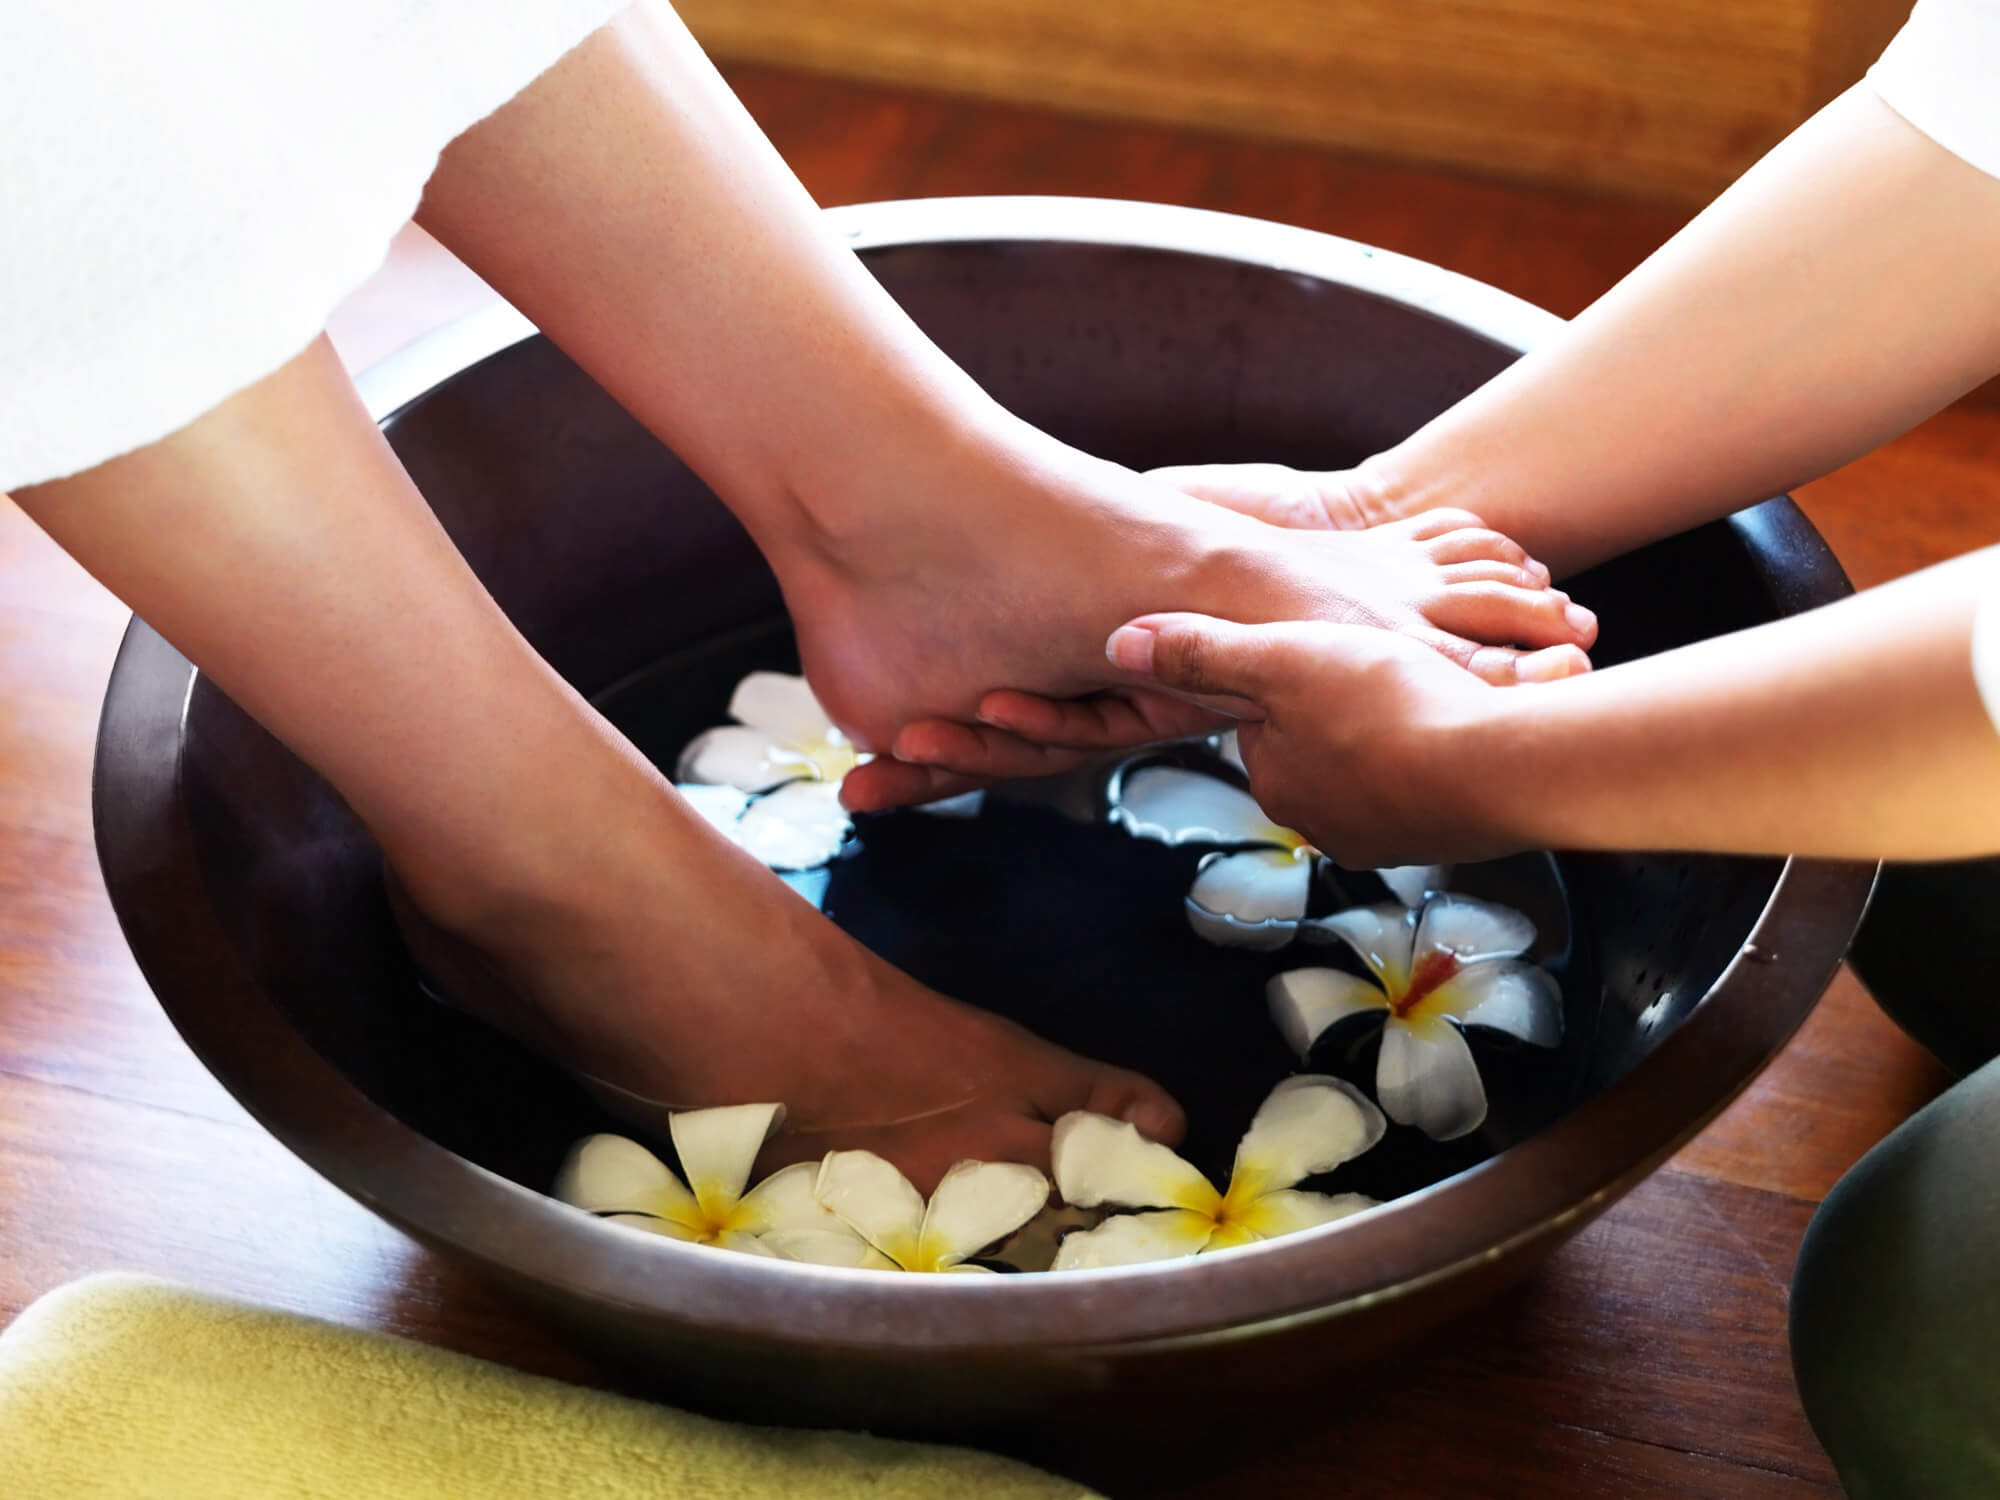 Massage ноги. Спа для ног. Массаж ног. Тайский массаж ног. Спа массаж ног.